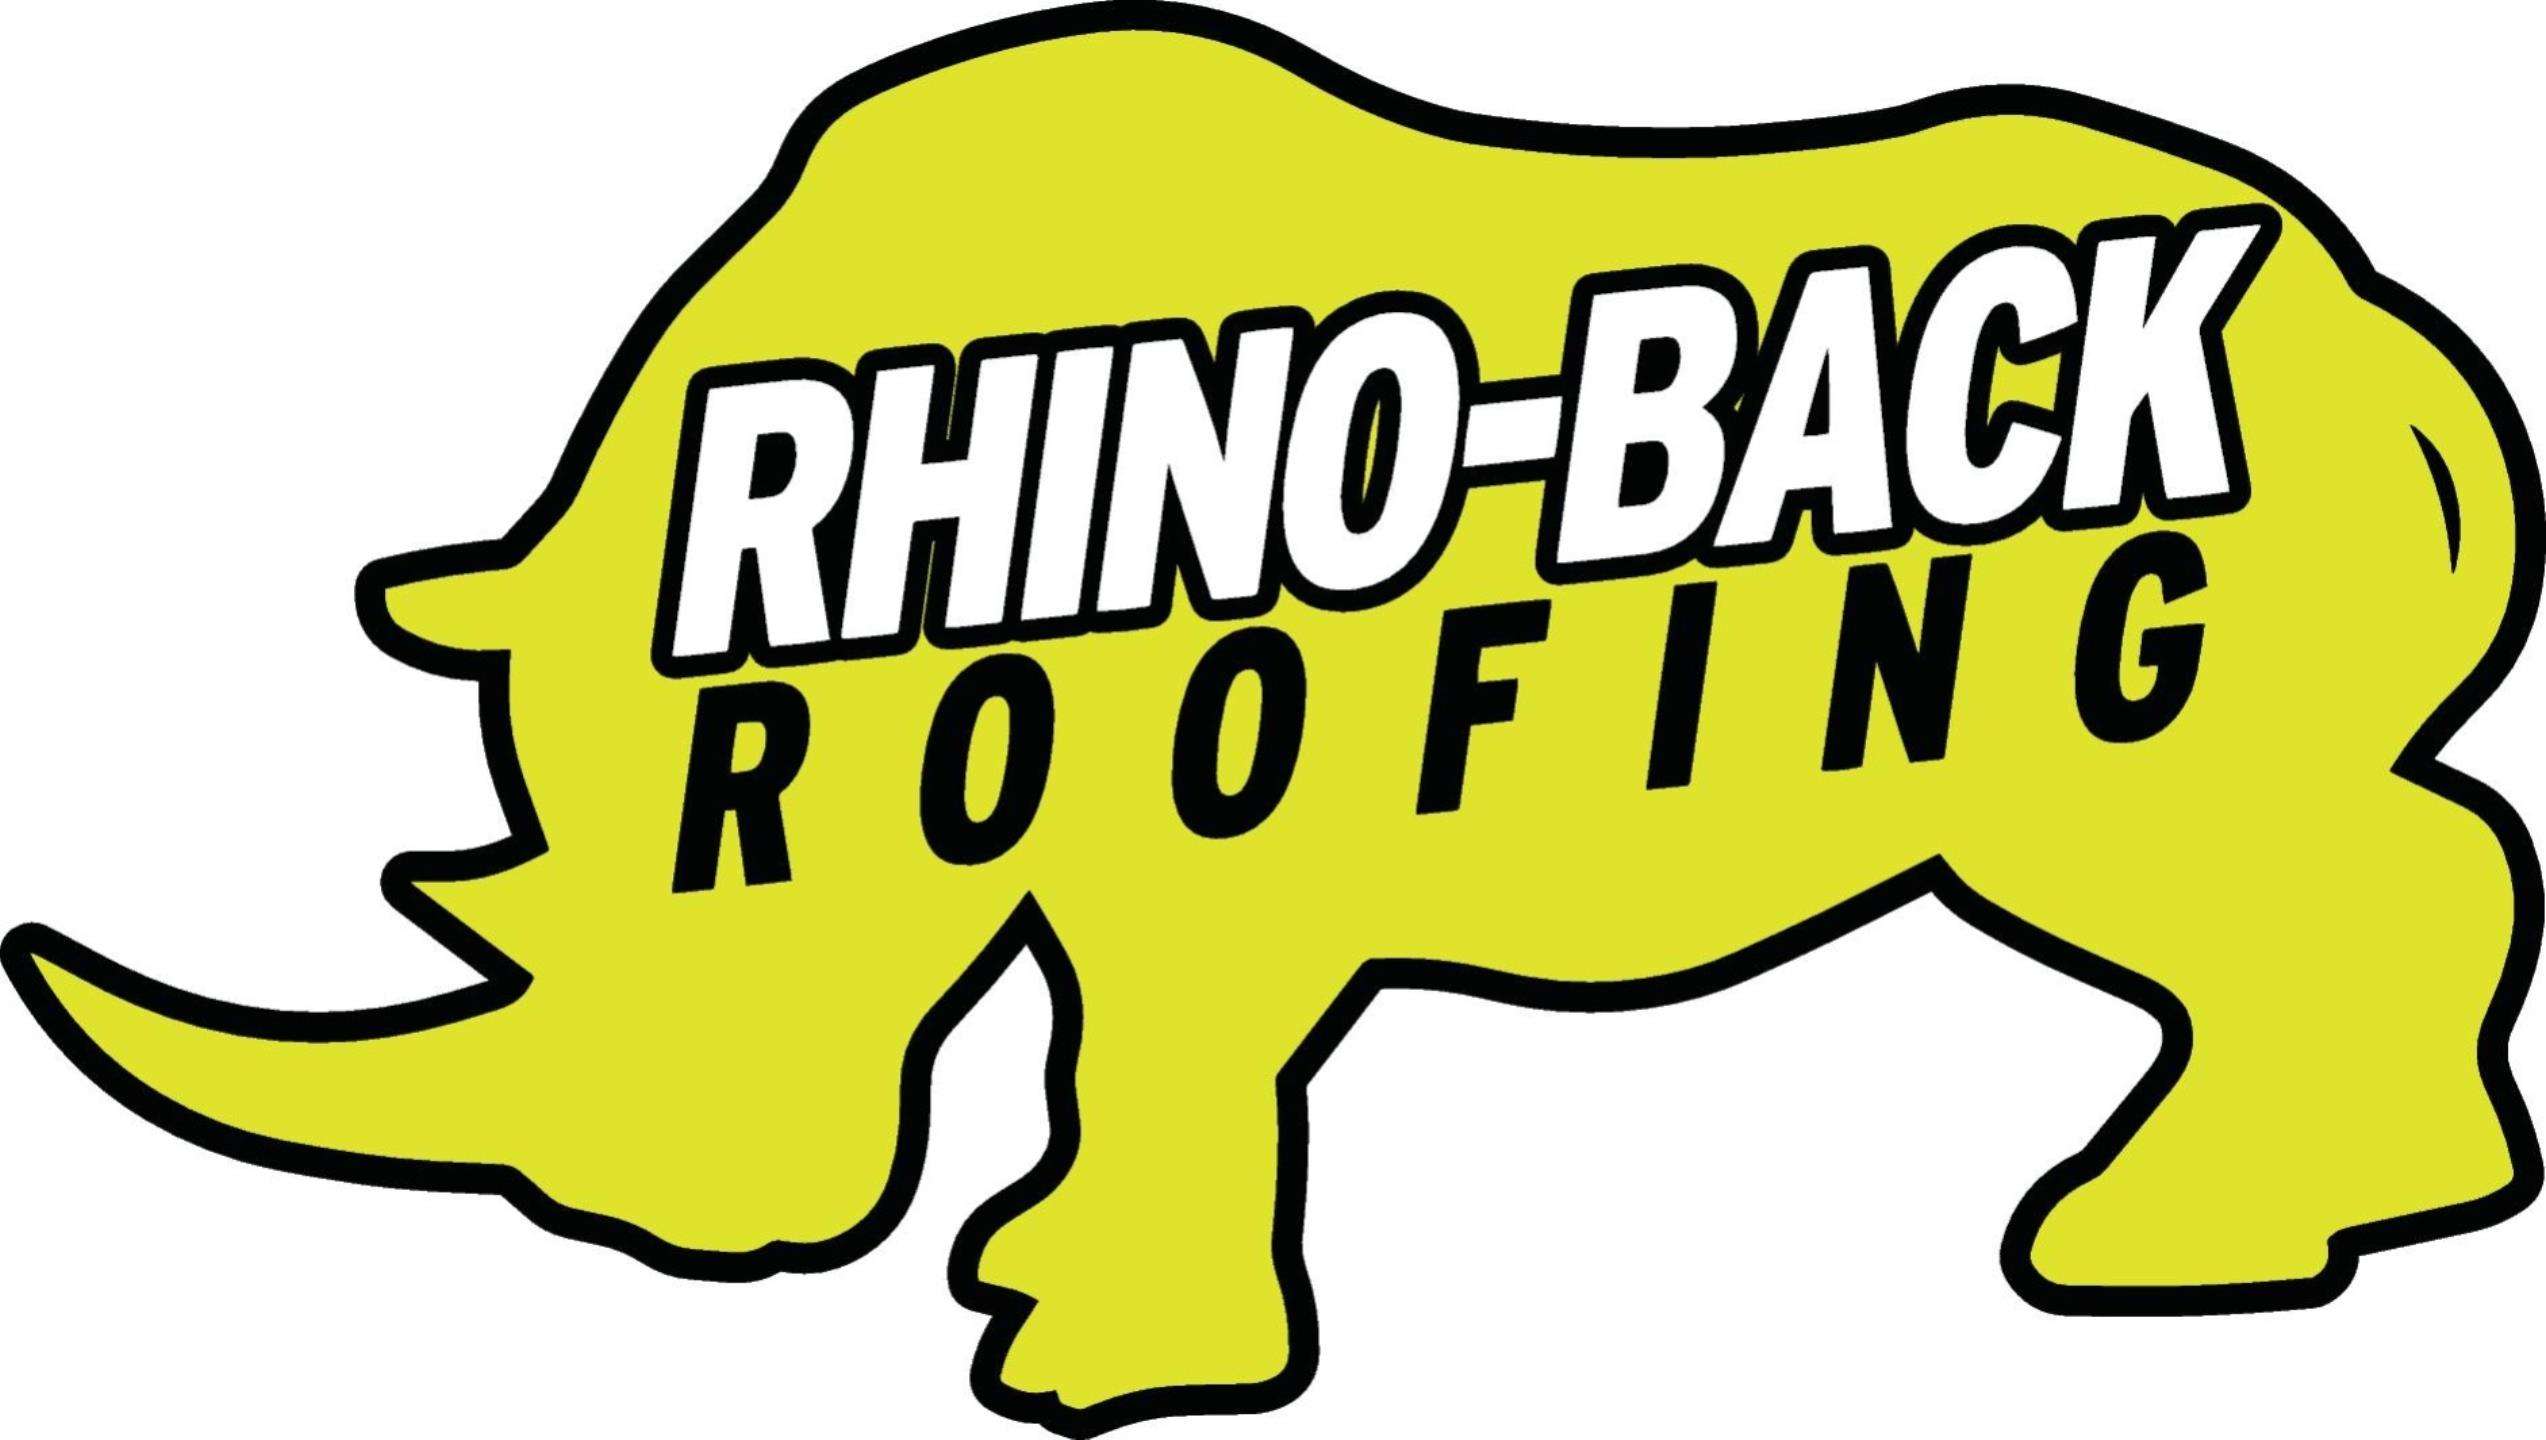 Rhino-Back Roofing LLC Logo